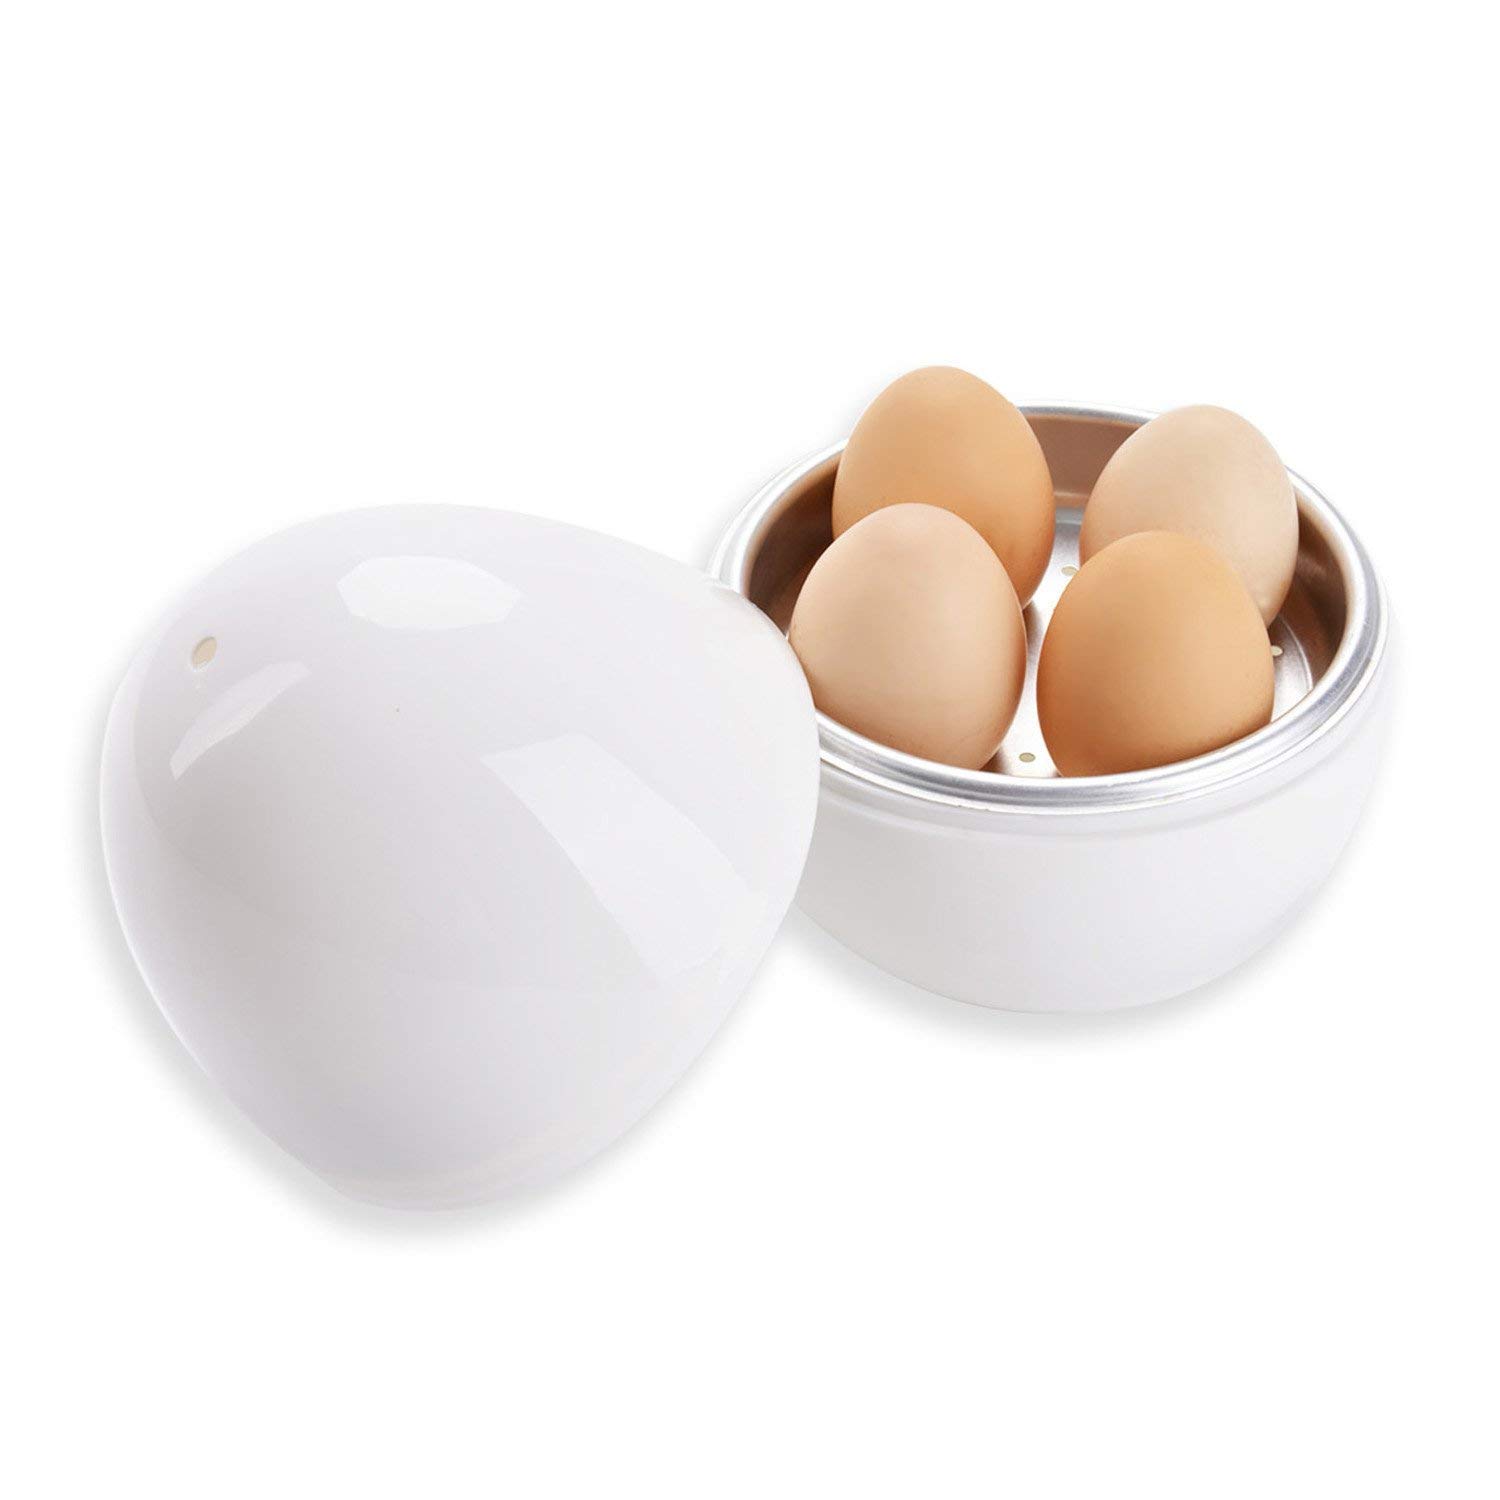 egg cooker price